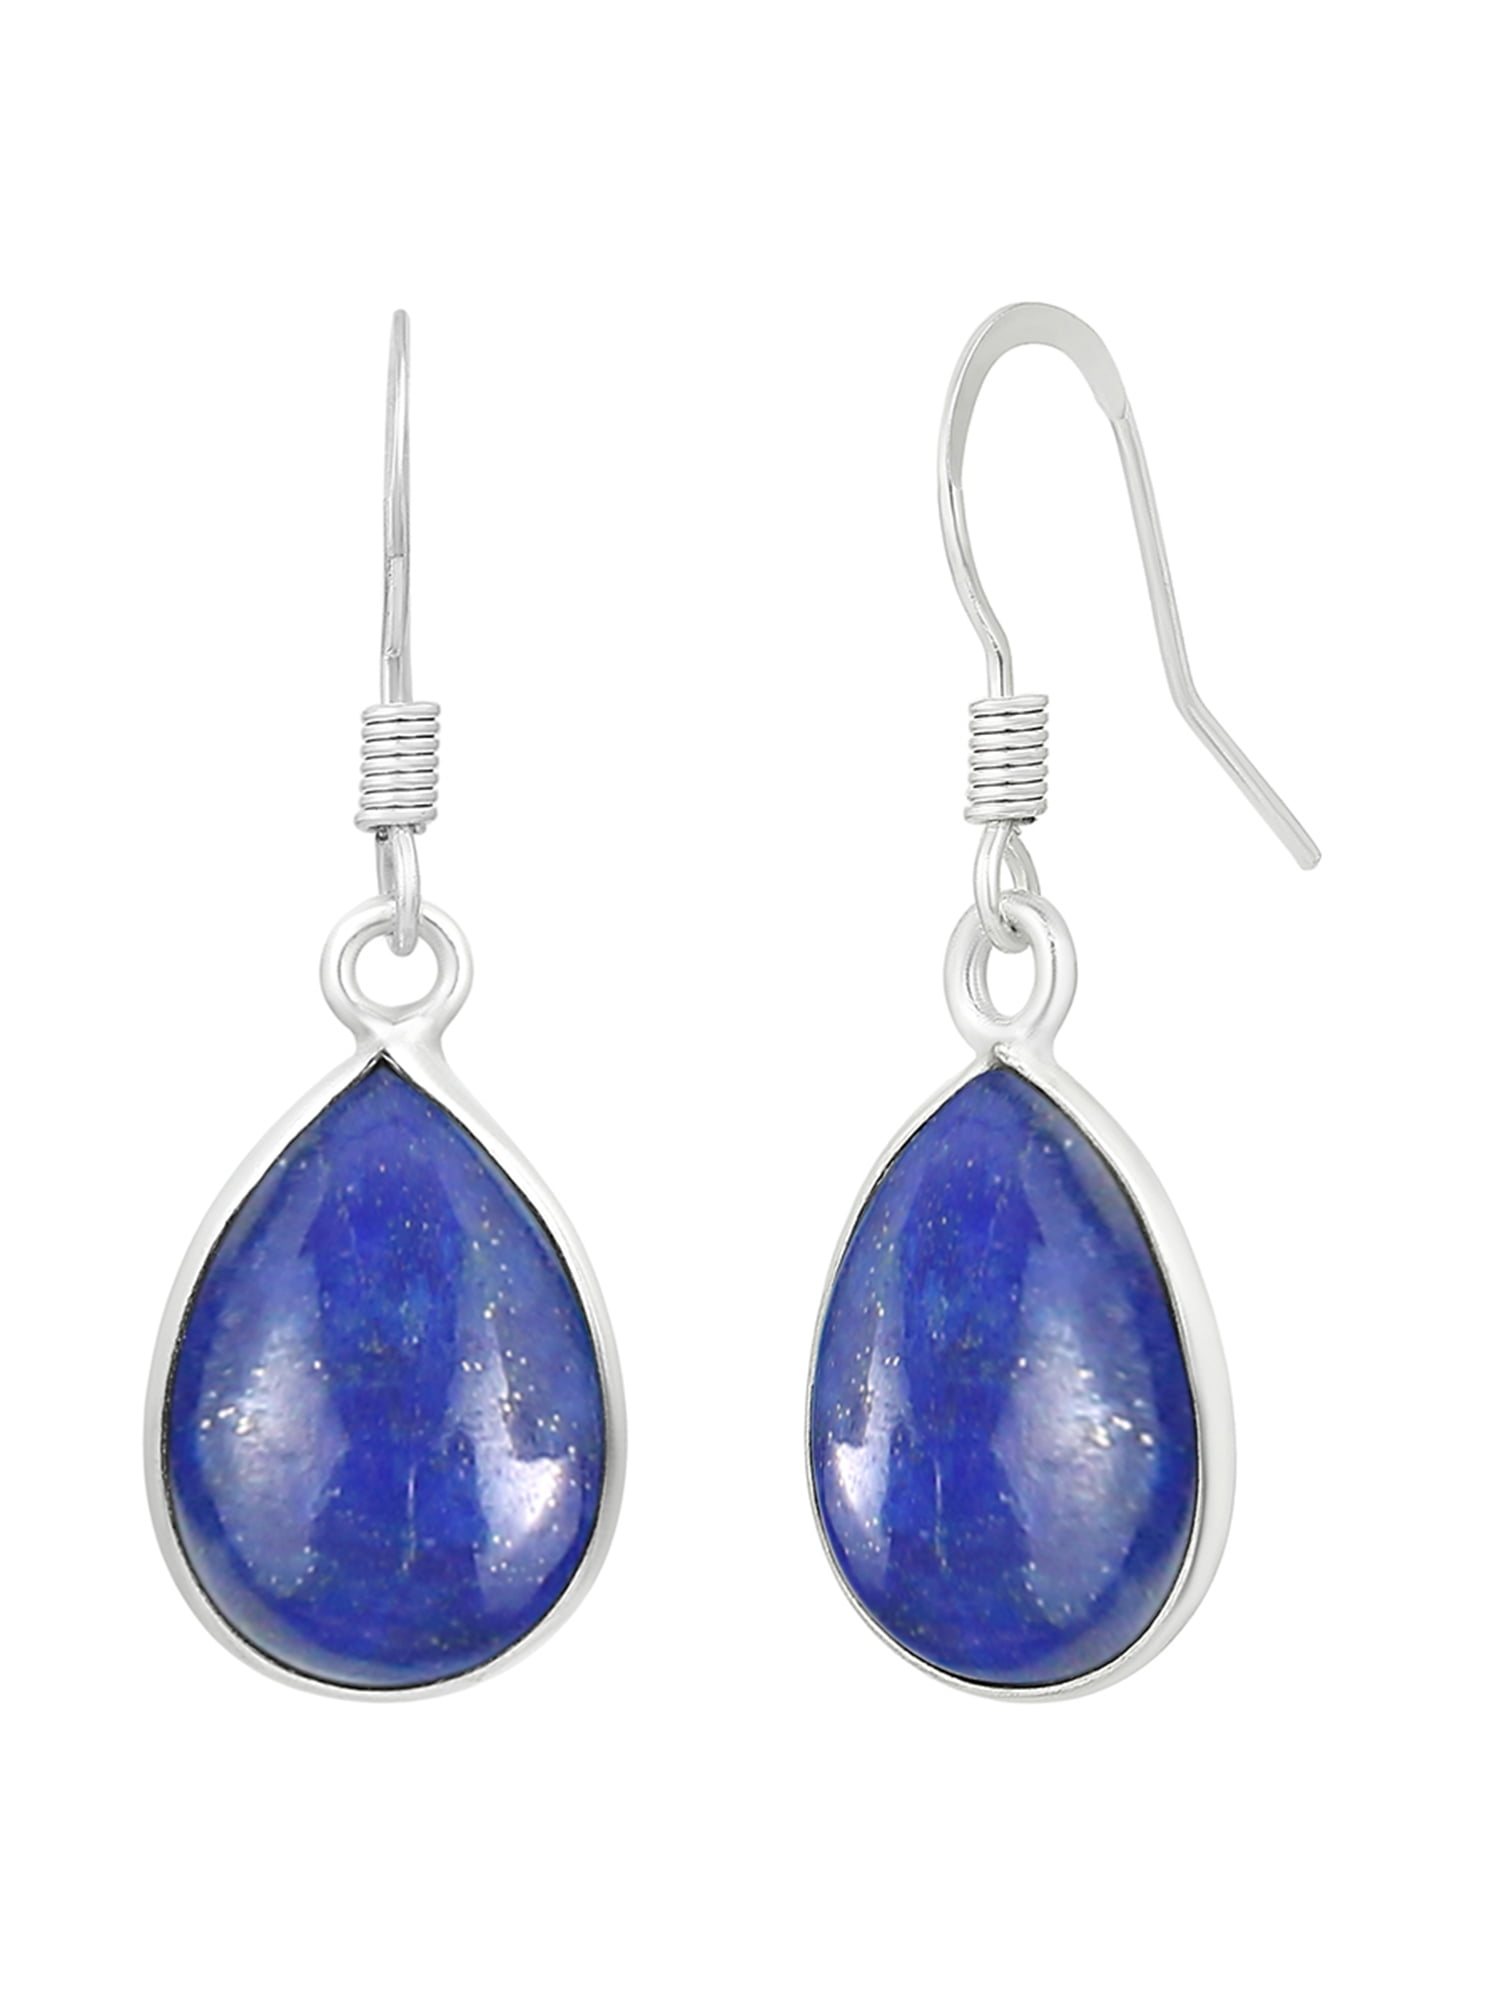 925 Silver Overlay Lapis Lazuli & Other Gemstones Variation Earrings 